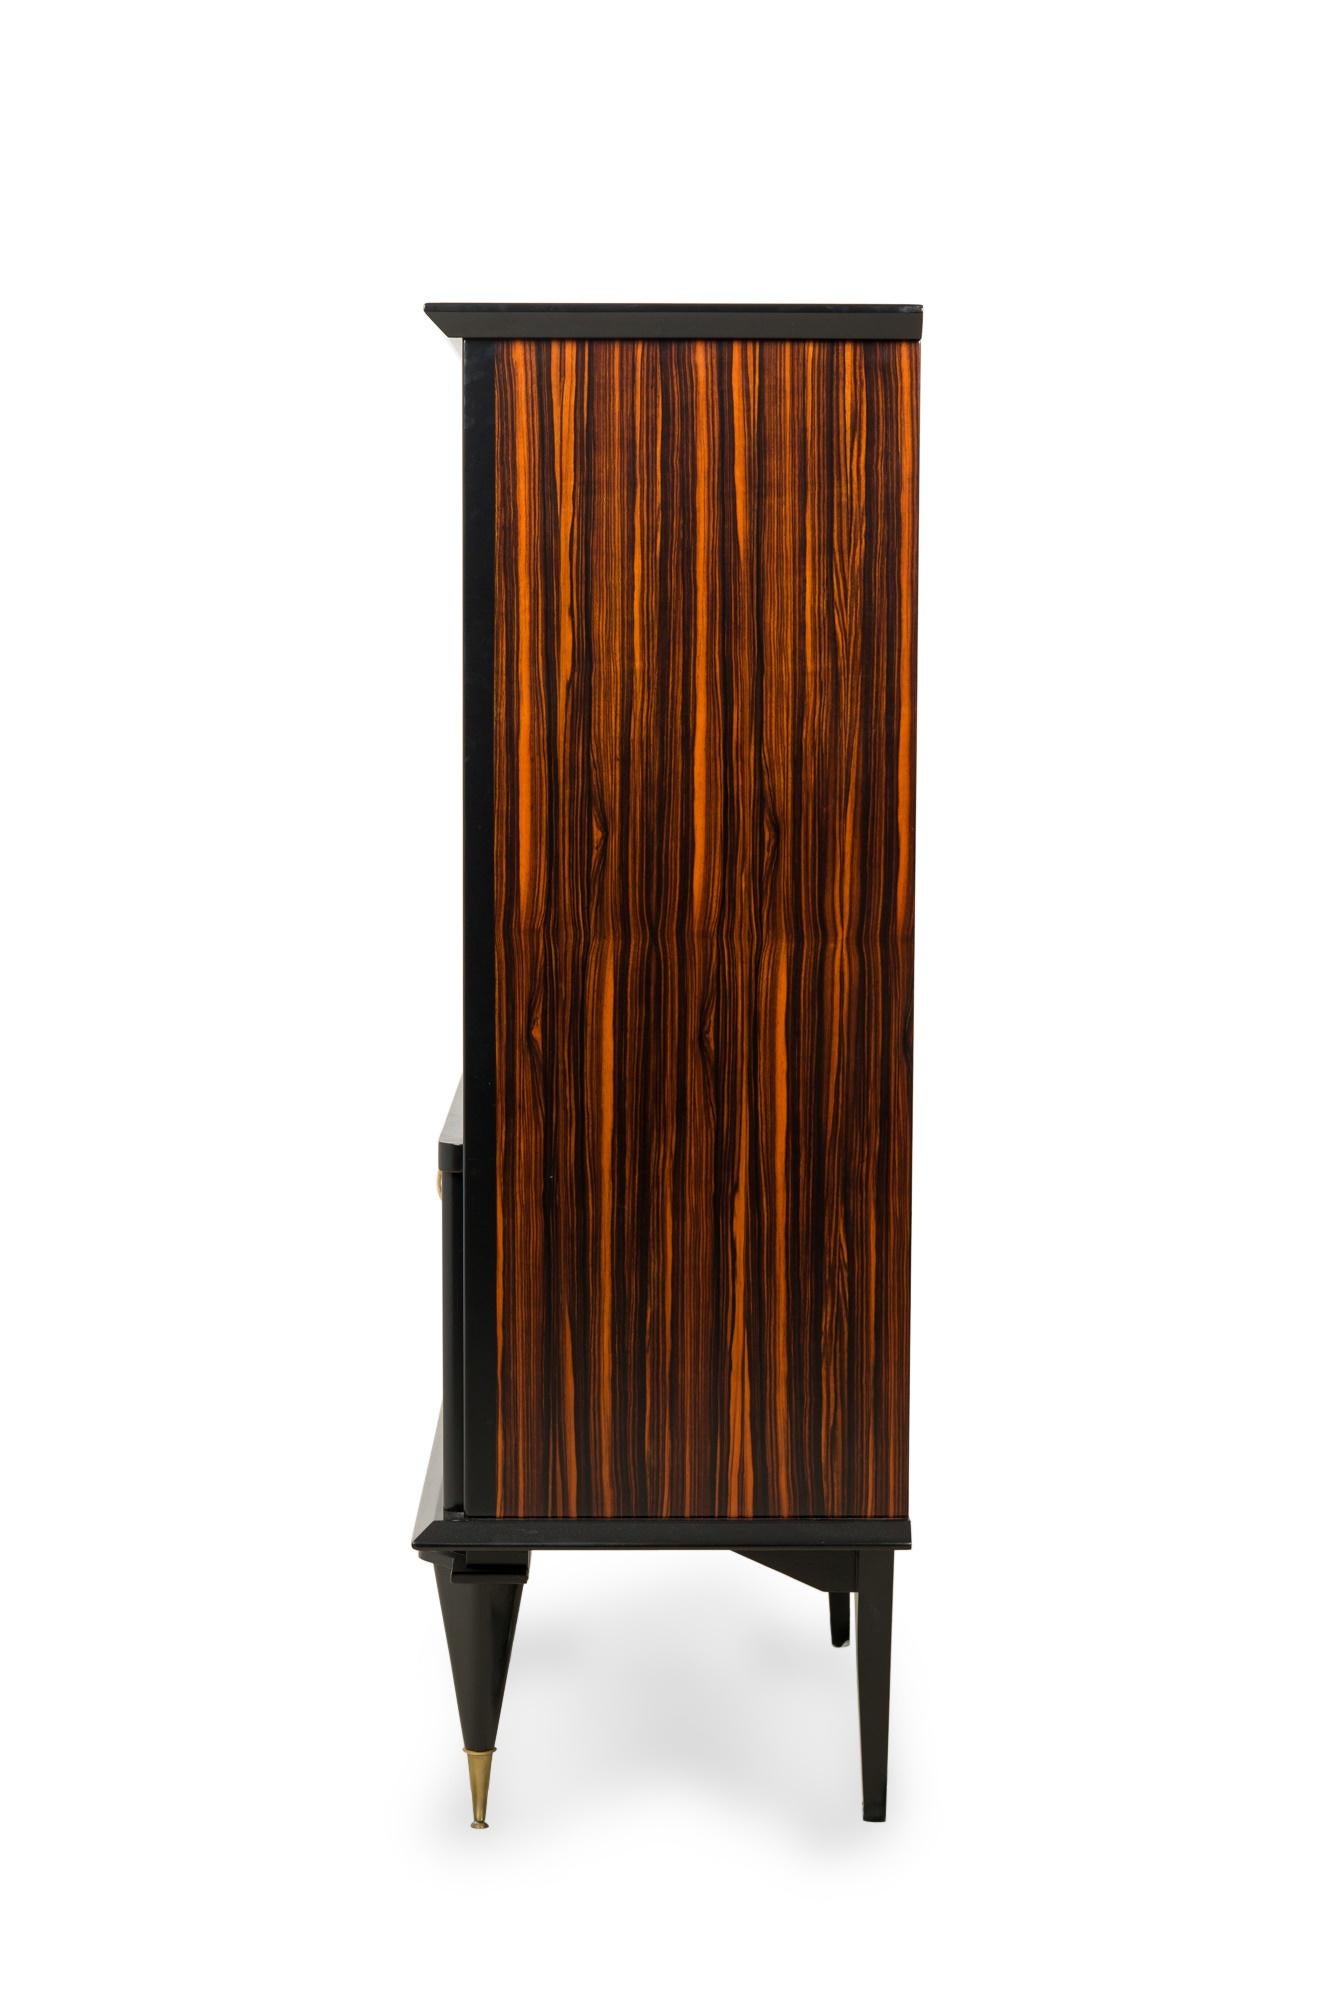 French Mid 20th Century Macassar Ebony Wood Art Deco Style Vitrine Cabinet For Sale